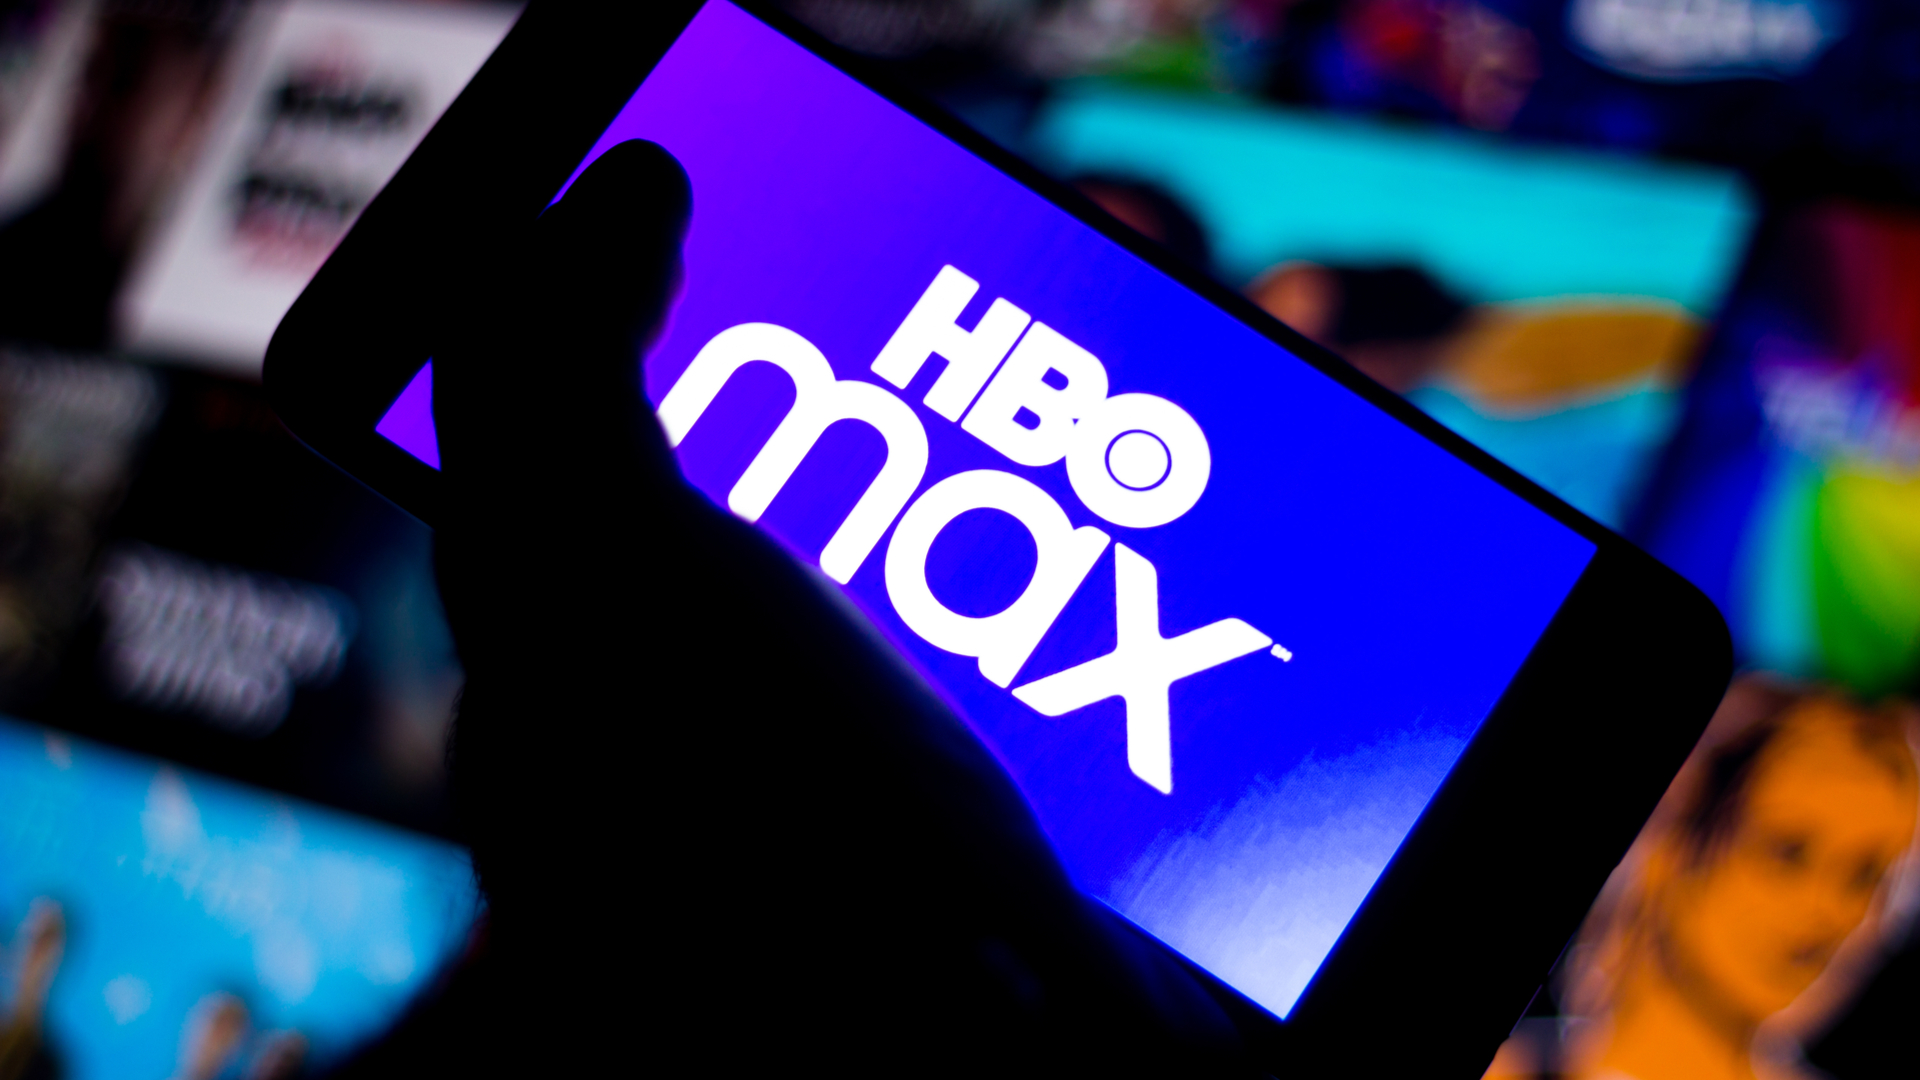 HBO Max: confira todos os lançamentos de fevereiro de 2022